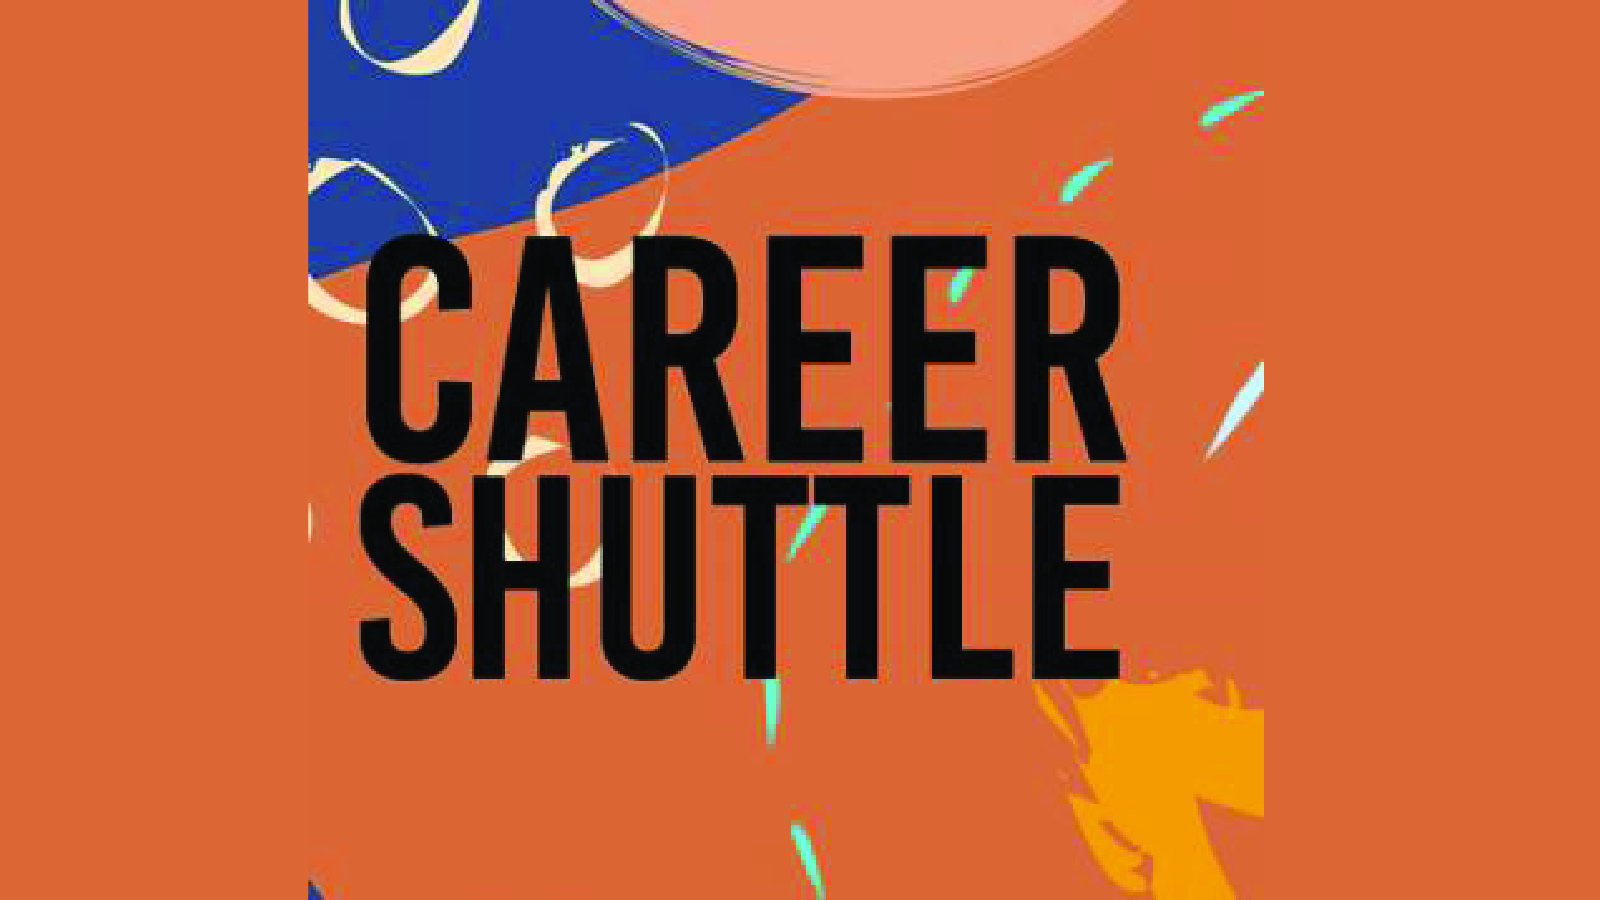  Career Shuttle - SiriusXM